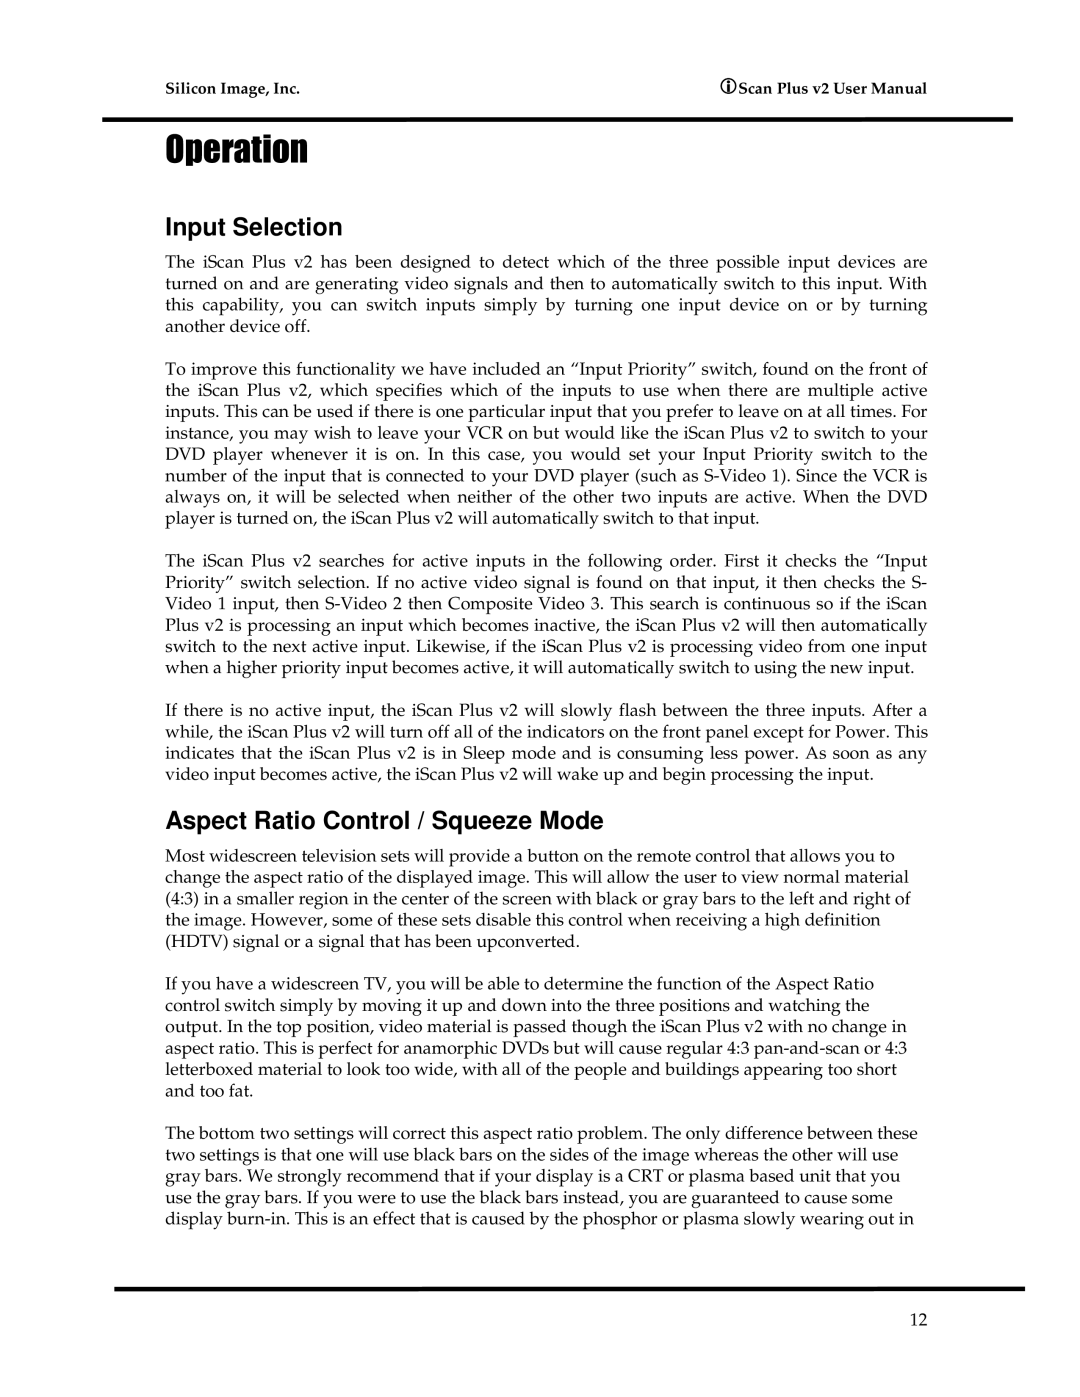 DVDO iScanPlus V2 manual 2SHUDWLRQ, Input Selection, Aspect Ratio Control / Squeeze Mode 